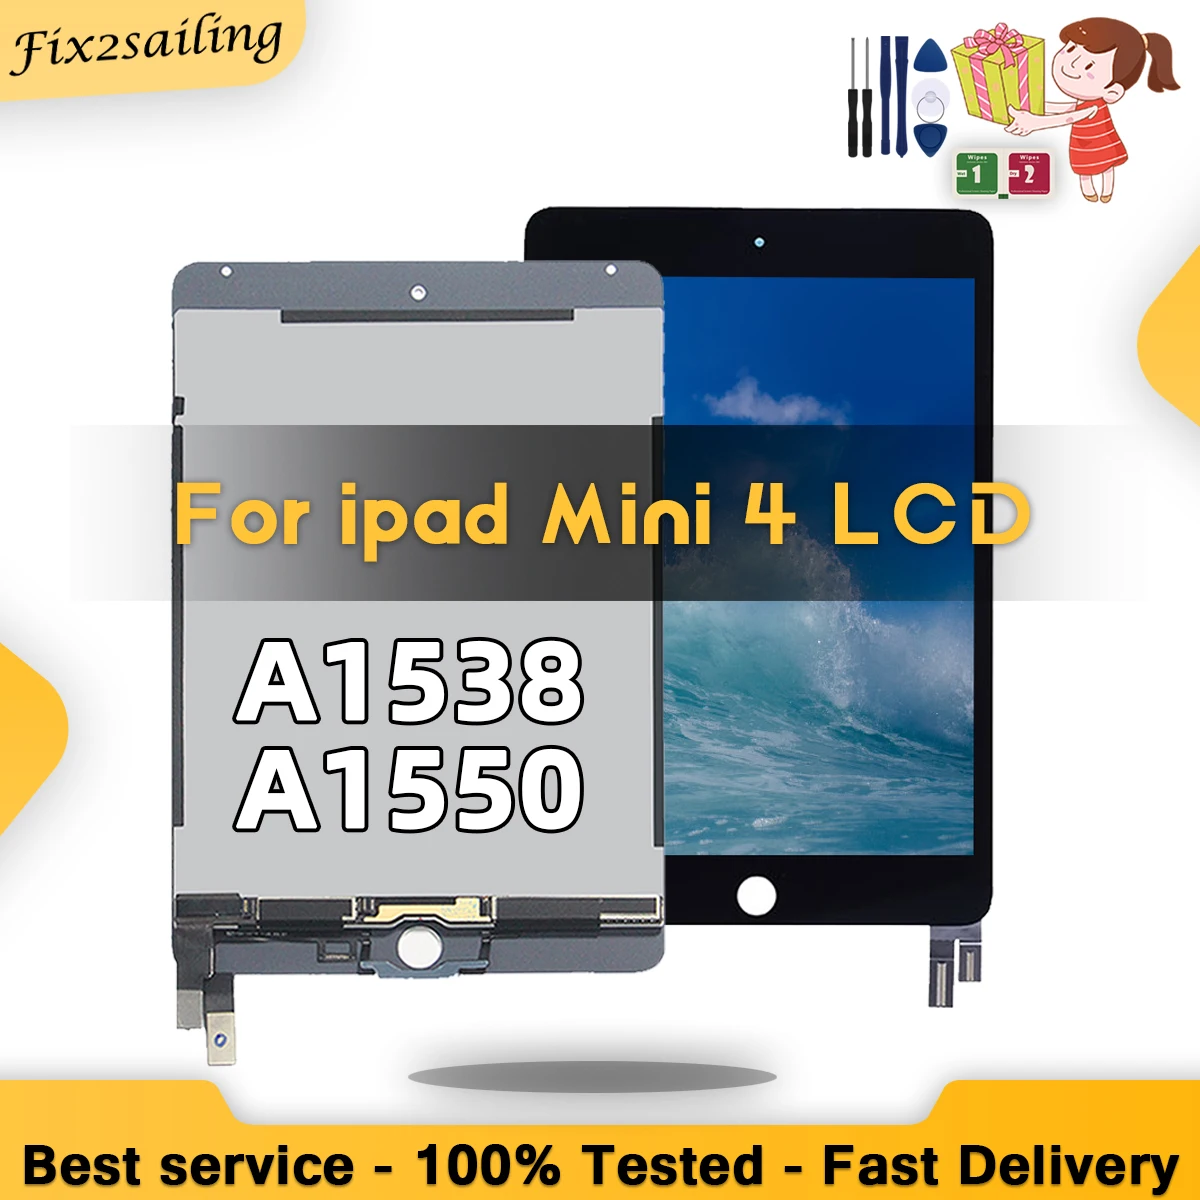 iPad Mini 4 Glass Digitizer and LCD Repair Service